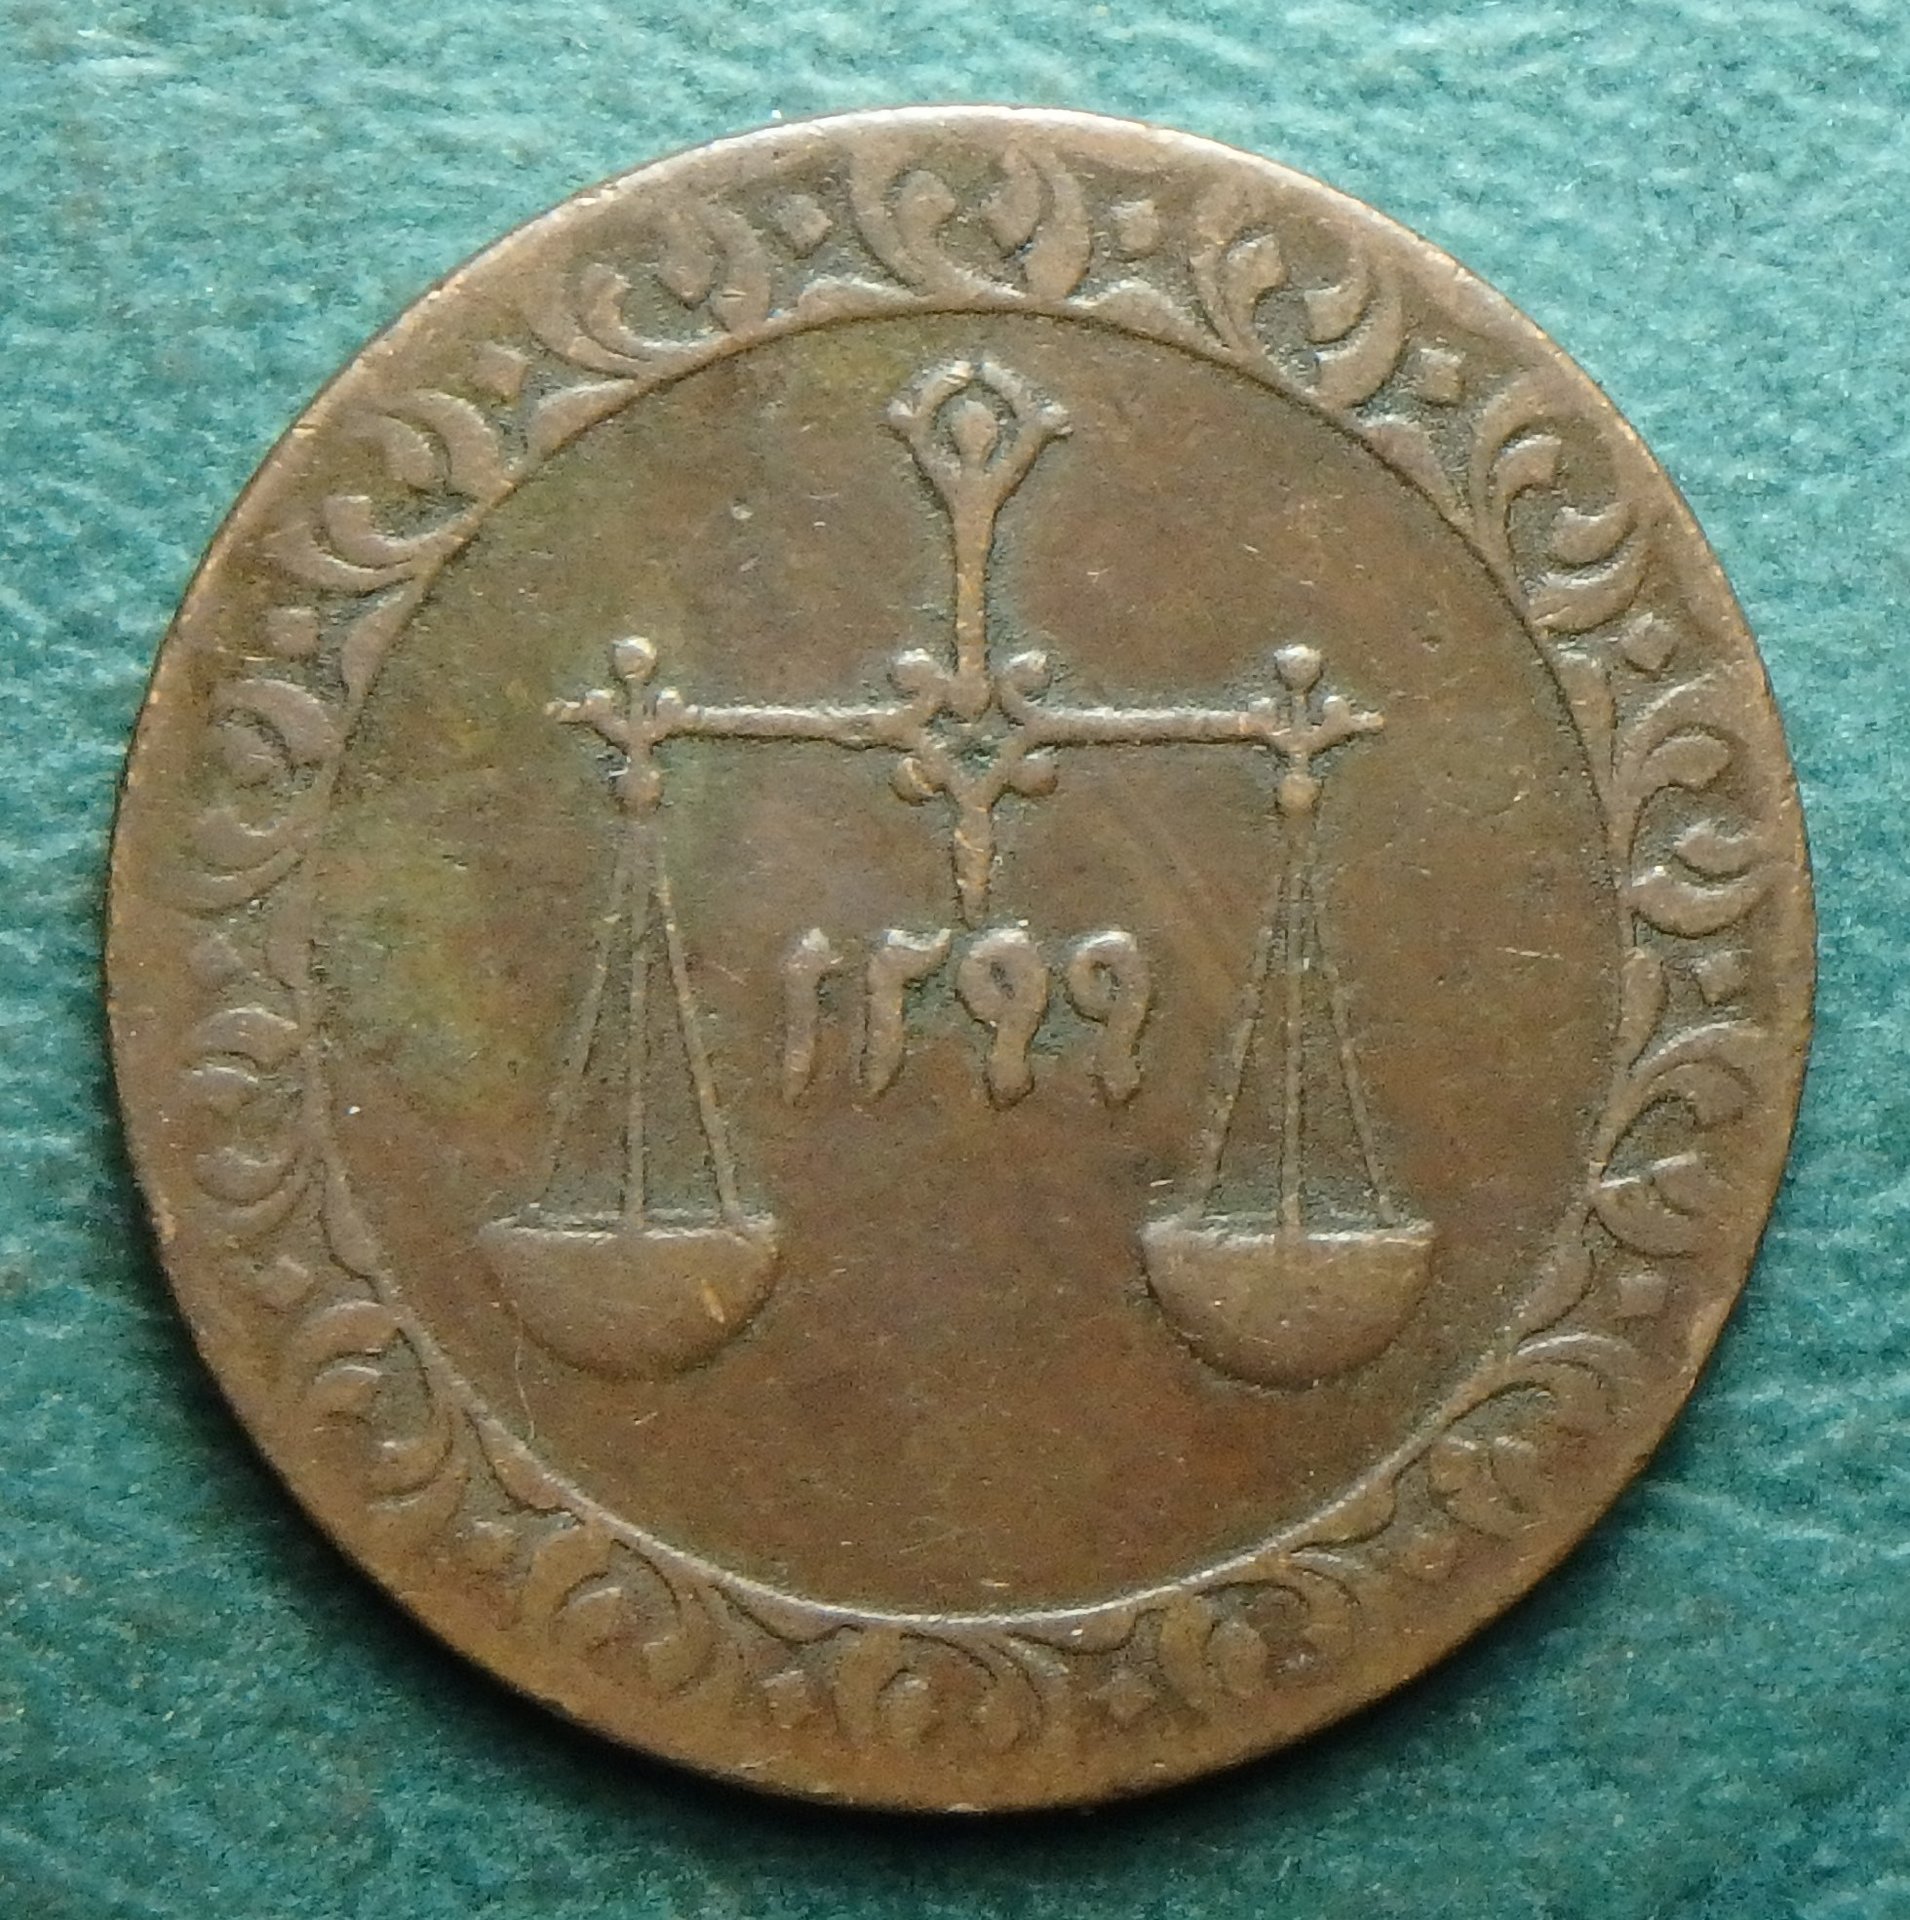 1882 Zanzibar (2) 1 p obv.JPG